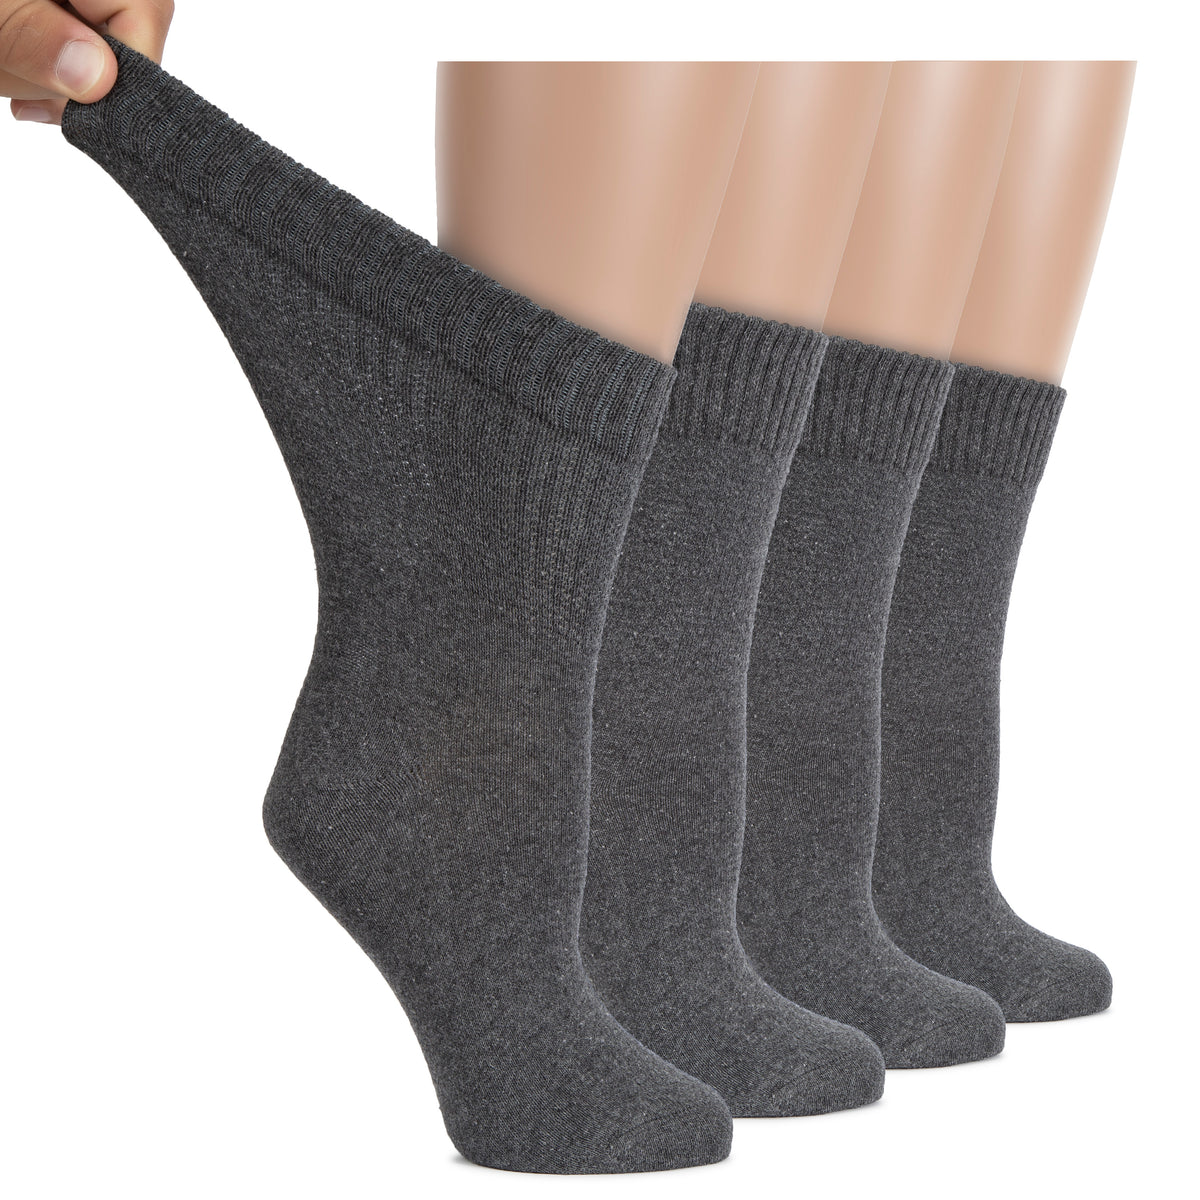 Hugh Ugoli Cotton Diabetic Women's Socks, Crew, Loose, Wide Stretchy, Thin, Seamless Toe and Non-Binding Top, 4 Pairs | Shoe Size: 9-12 | Light Grey